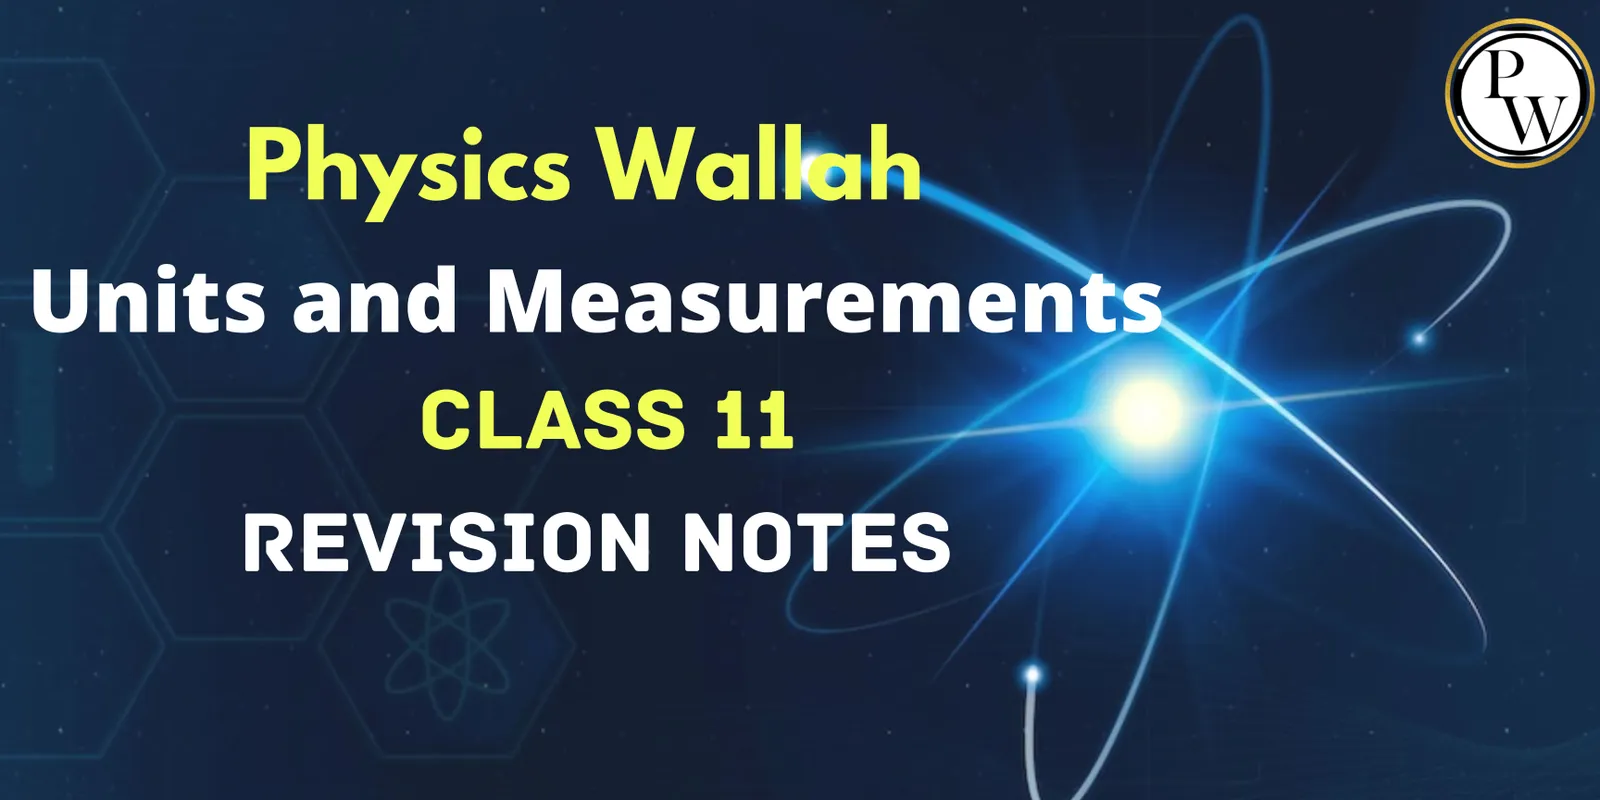 Physics Wallah Units and Measurements Class 11 Revision Notes